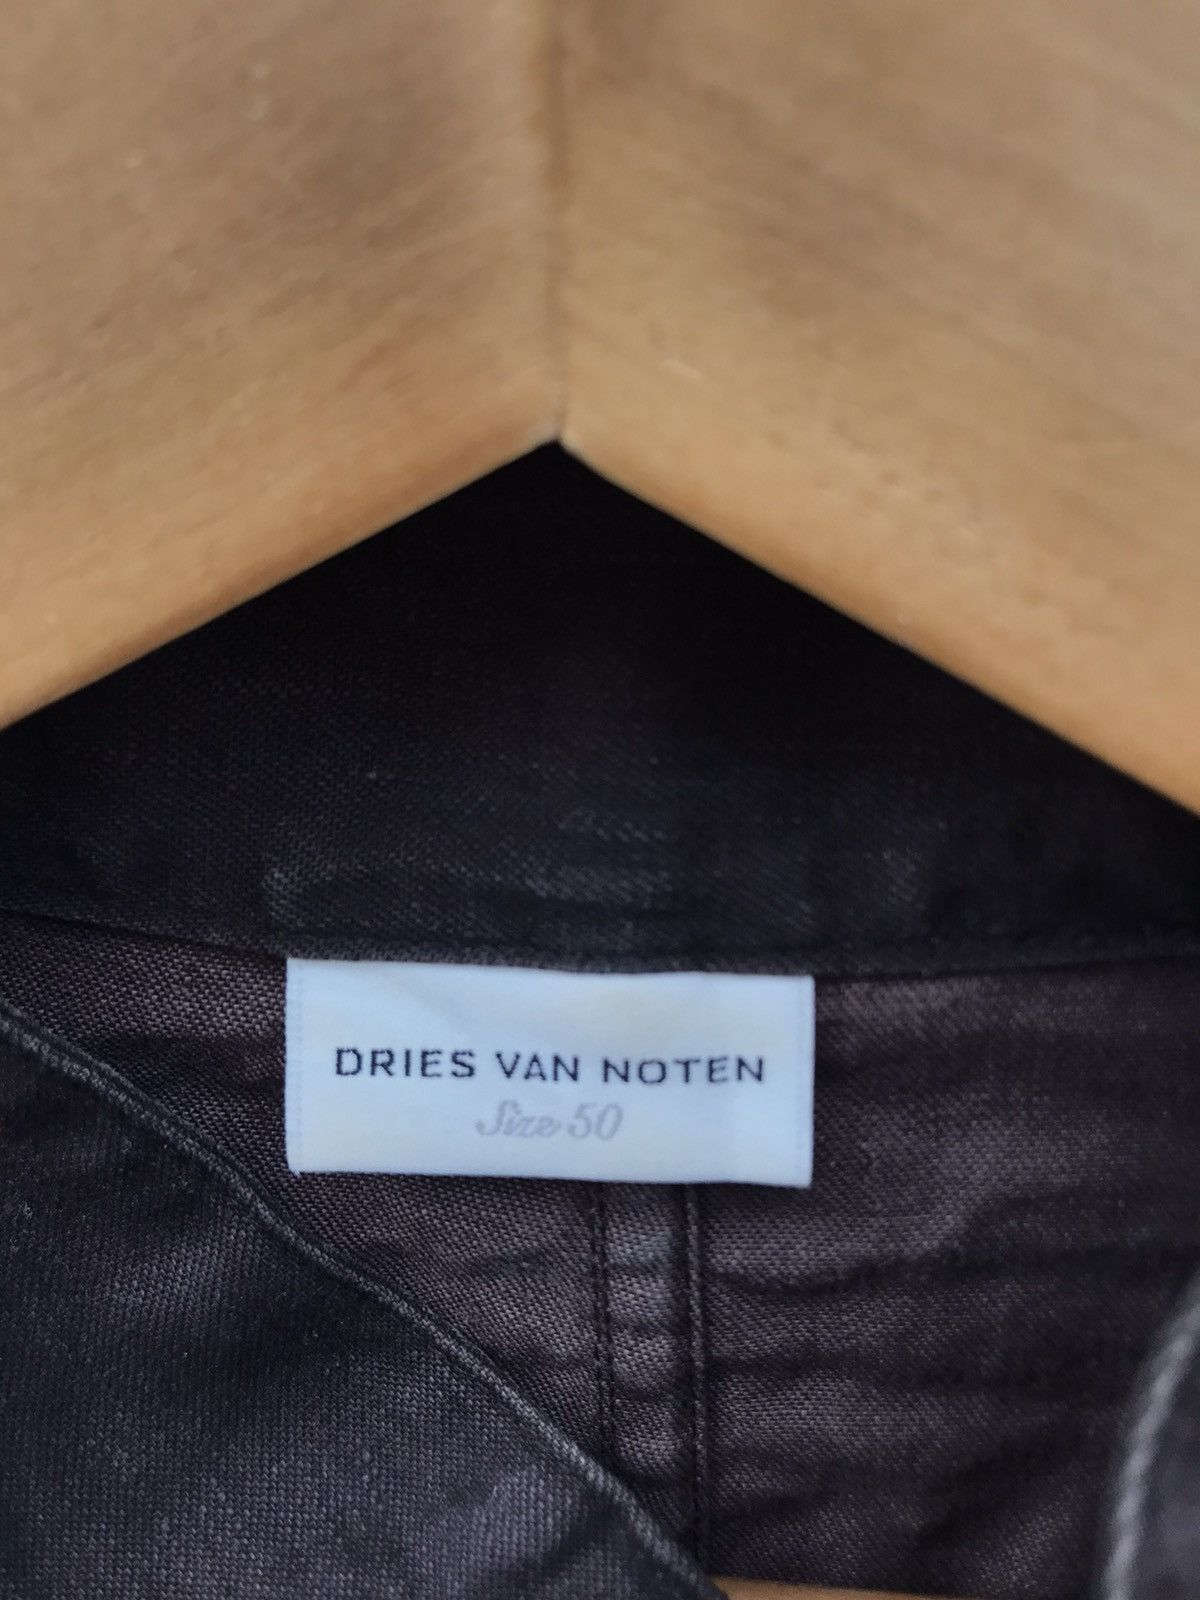 Dries Van Noten jacket double Pocket Rare Button - 4